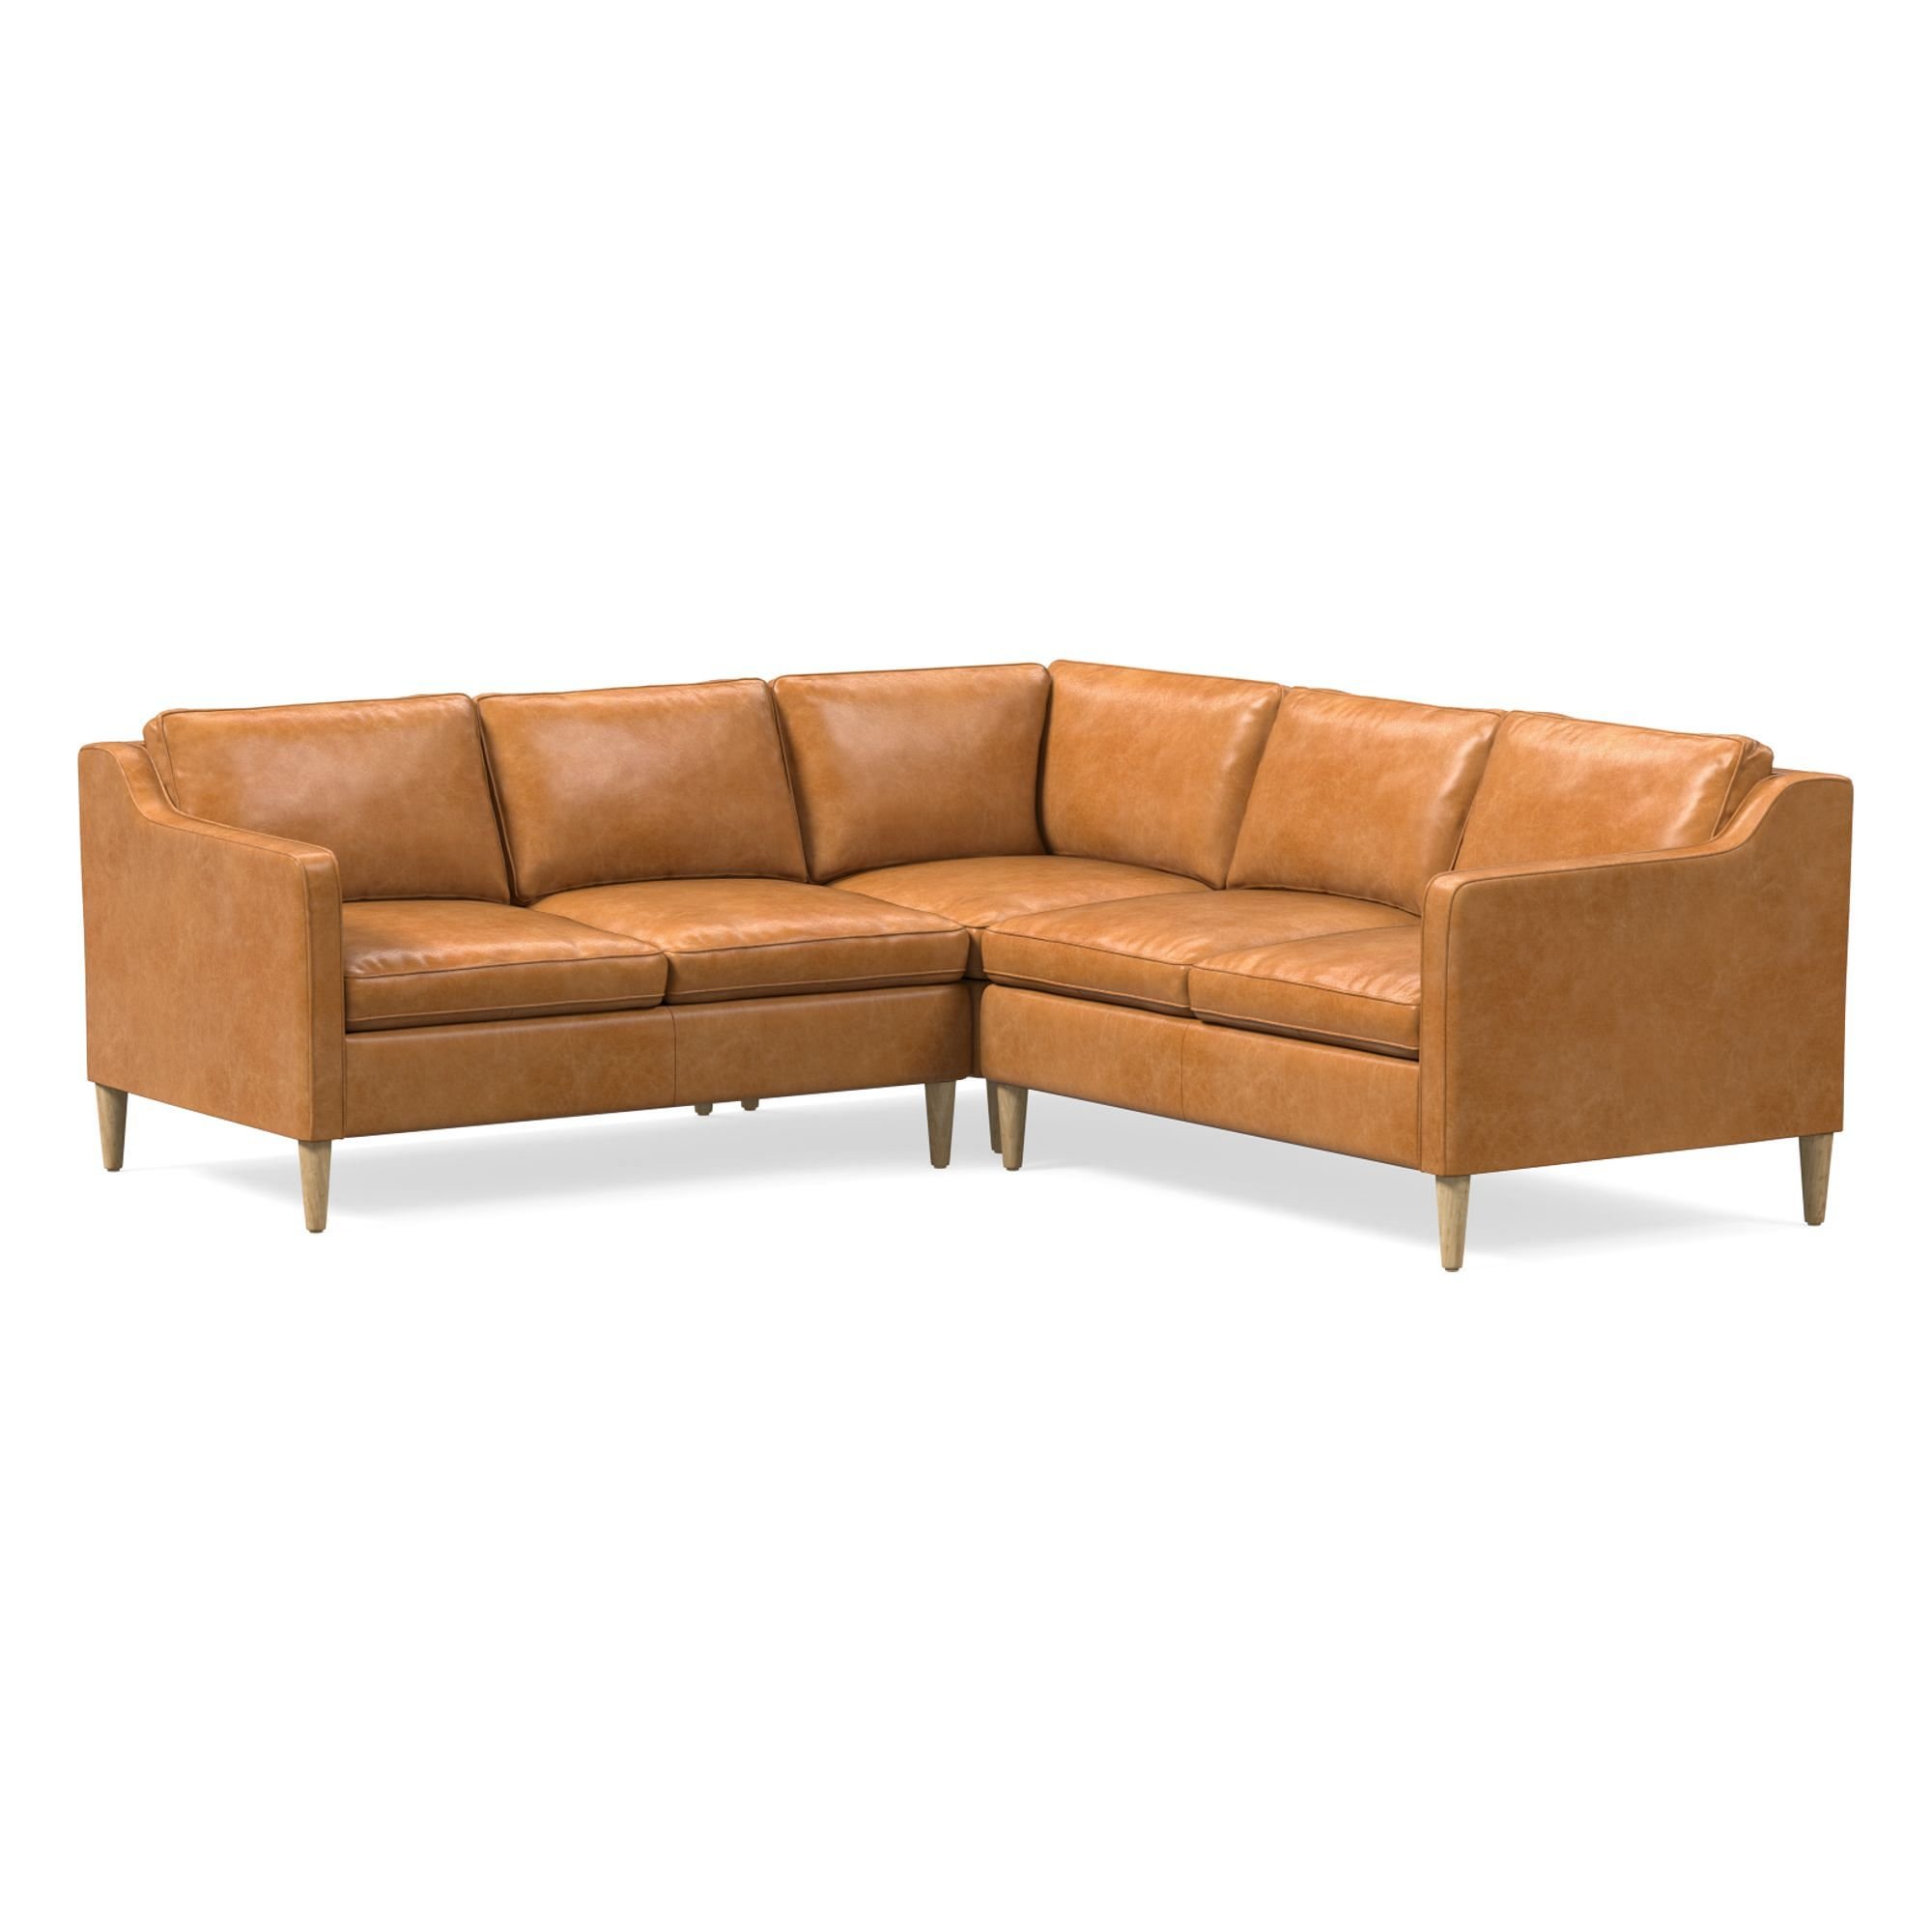 Hamilton Leather Sectional Sofa